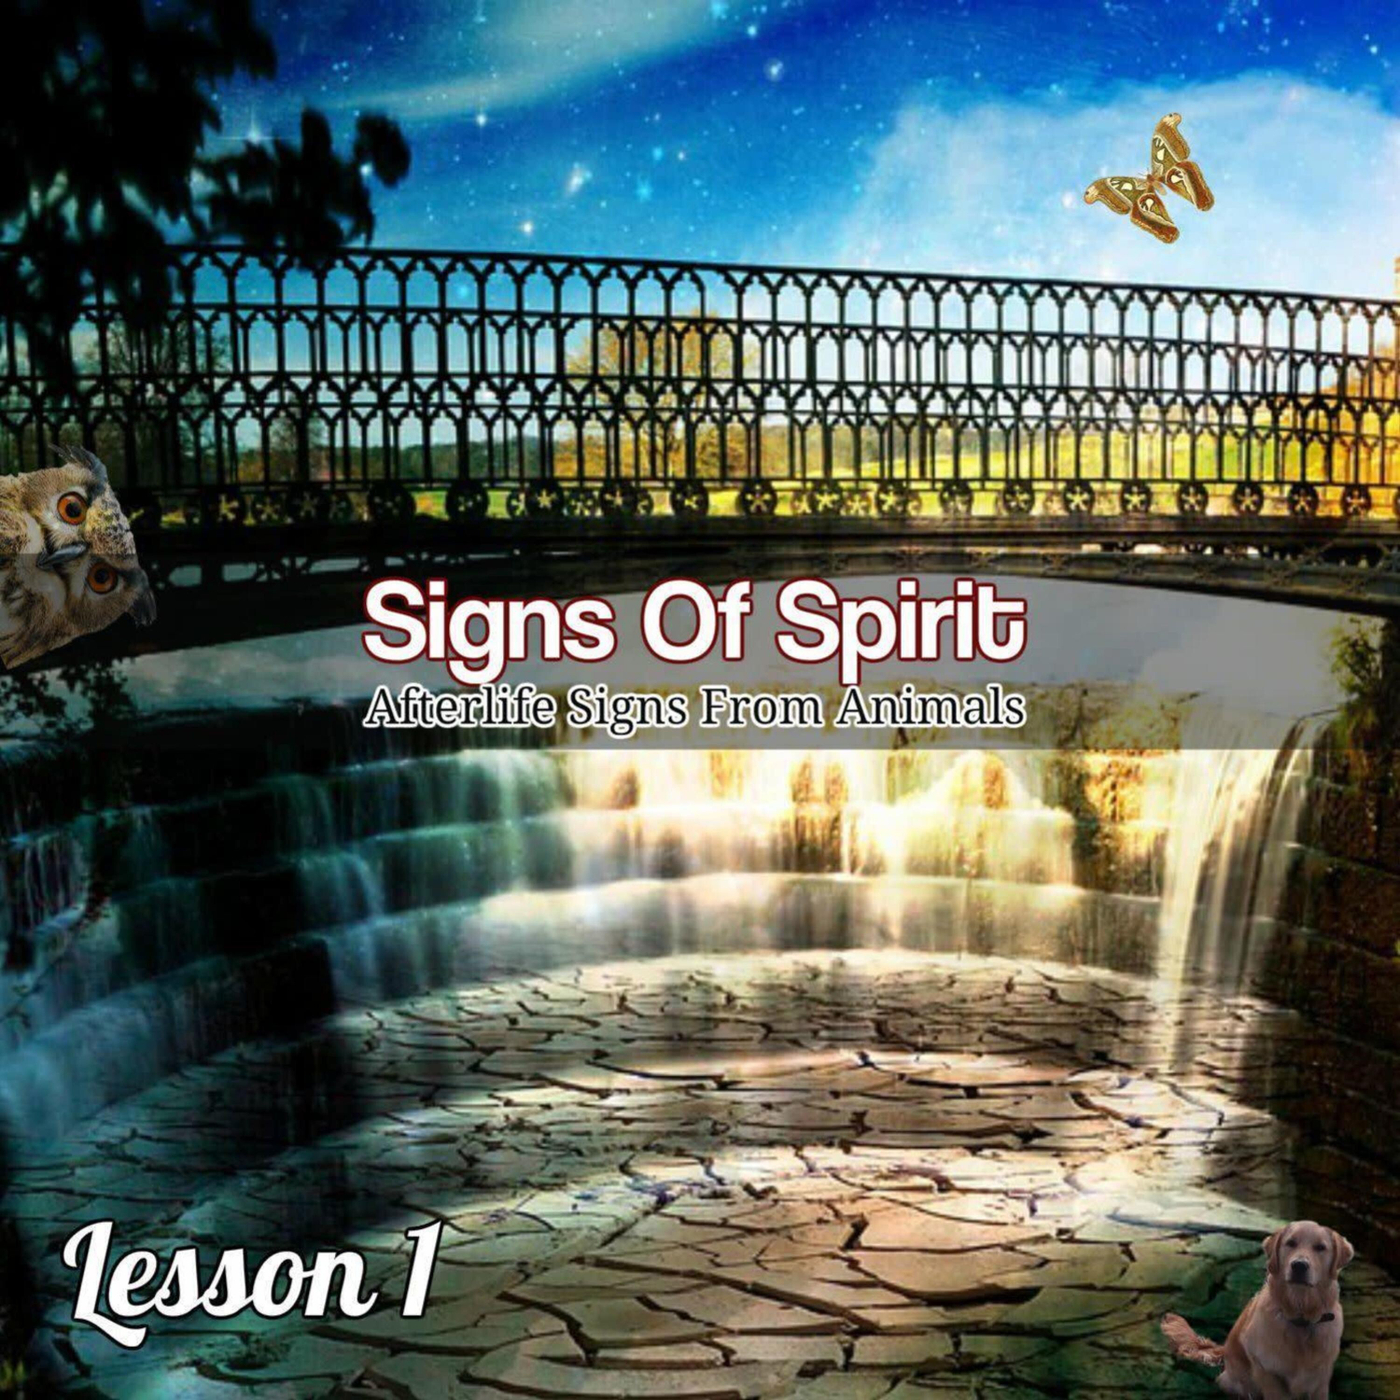 Signs Of Spirit - Animal Signs